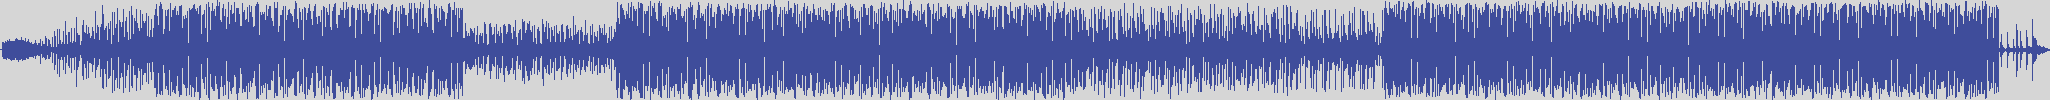 nf_boyz_records [NFY051] Michael Epps - Fluid Fear [Runo Carlos Mix] audio wave form